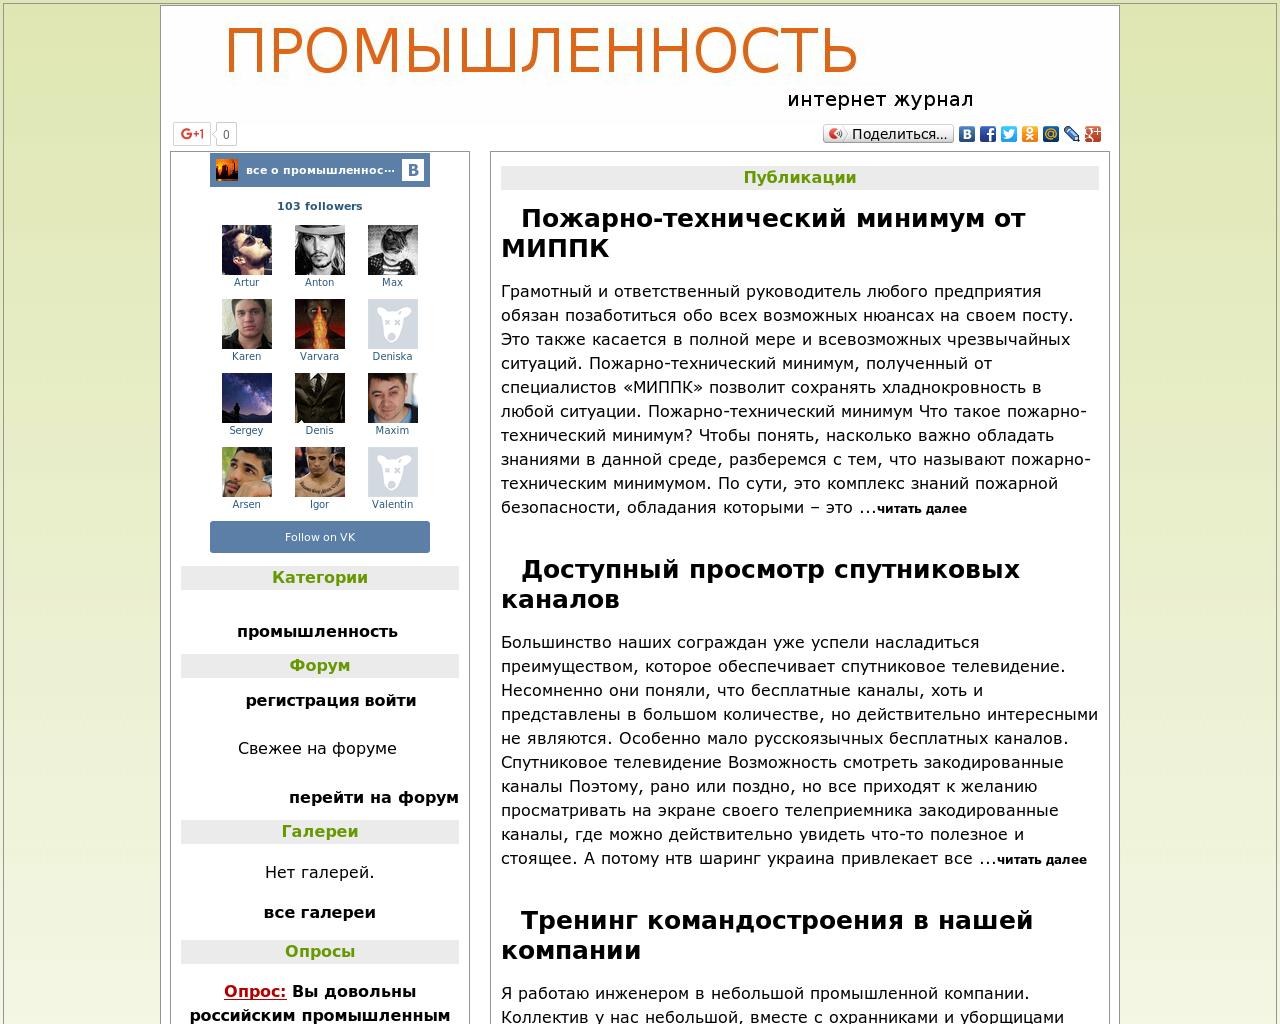 Изображение сайта prom-f1.ru в разрешении 1280x1024